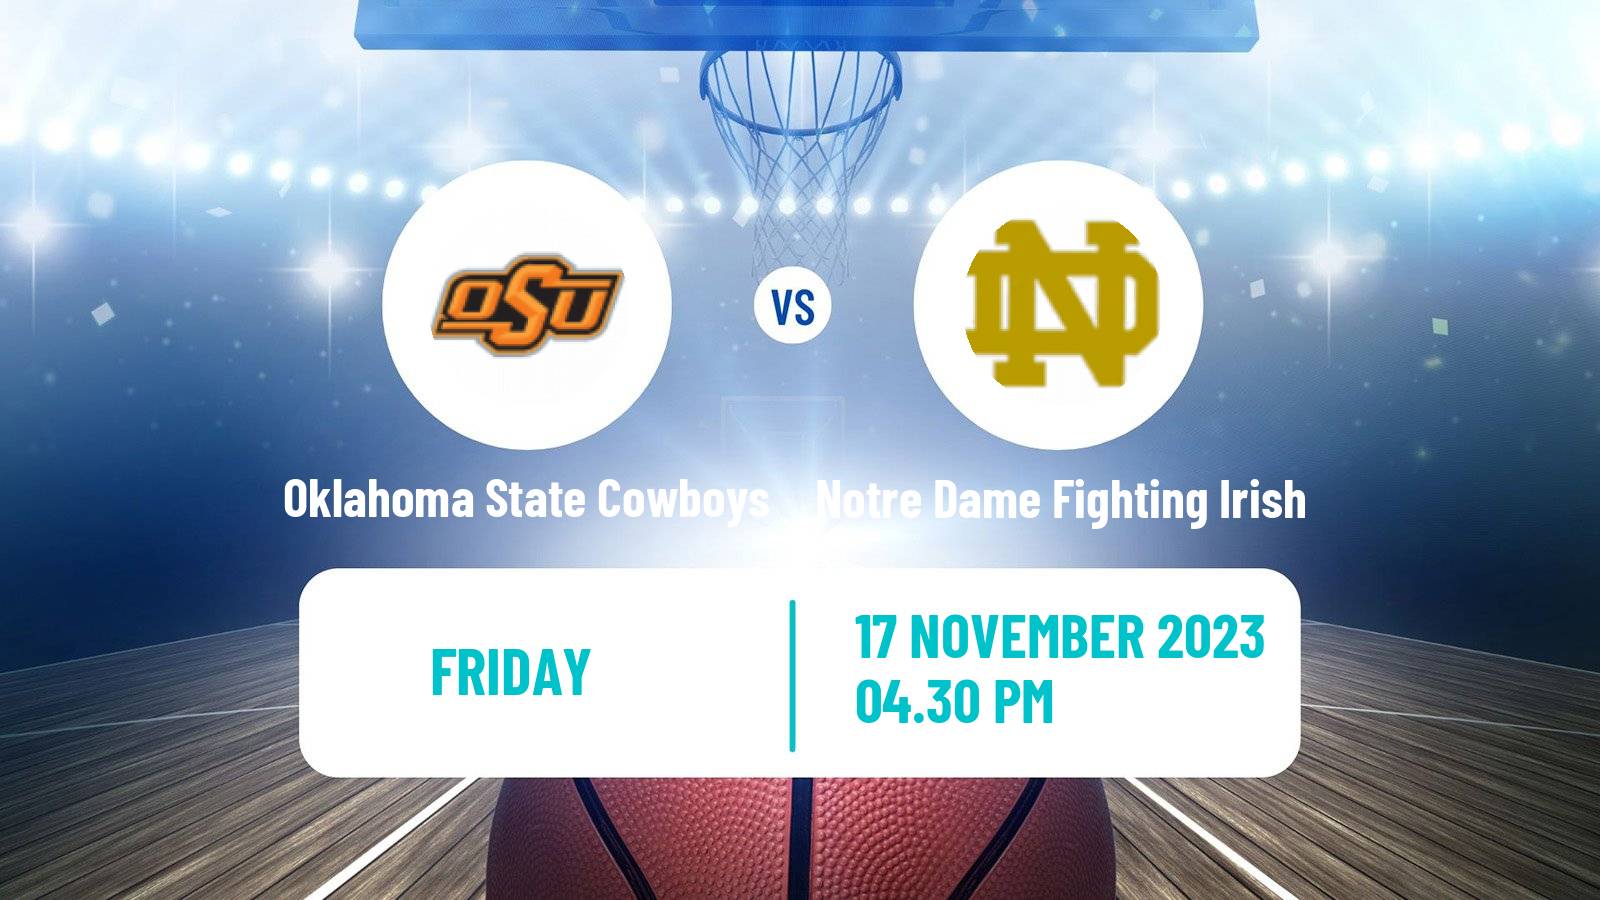 Basketball NCAA College Basketball Oklahoma State Cowboys - Notre Dame Fighting Irish